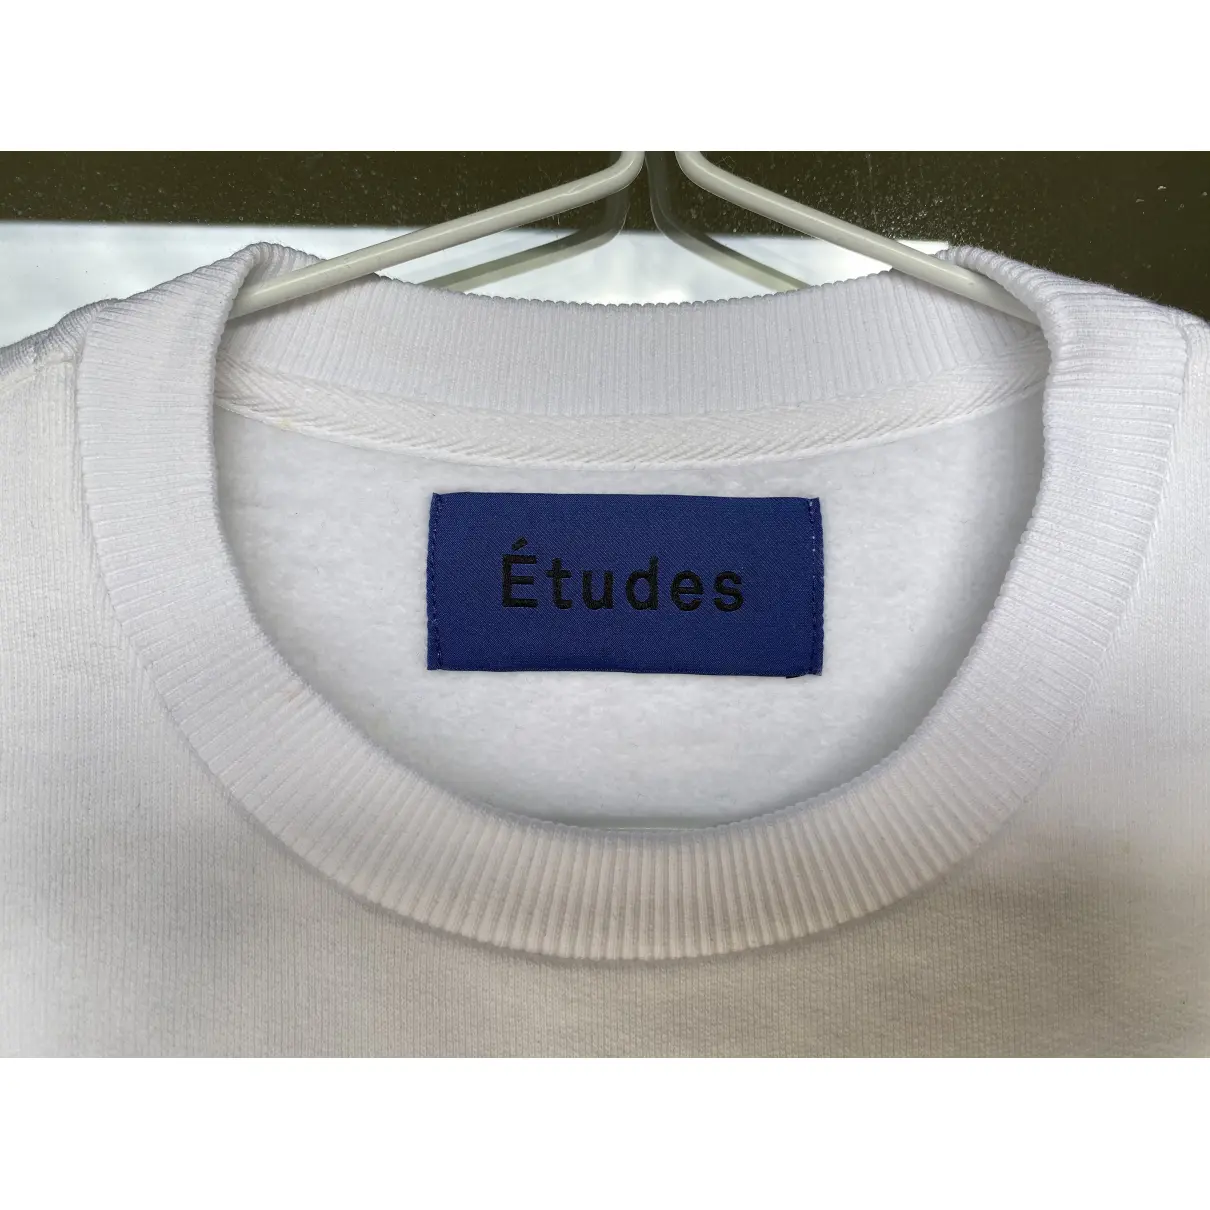 Luxury Études Studio Knitwear & Sweatshirts Men